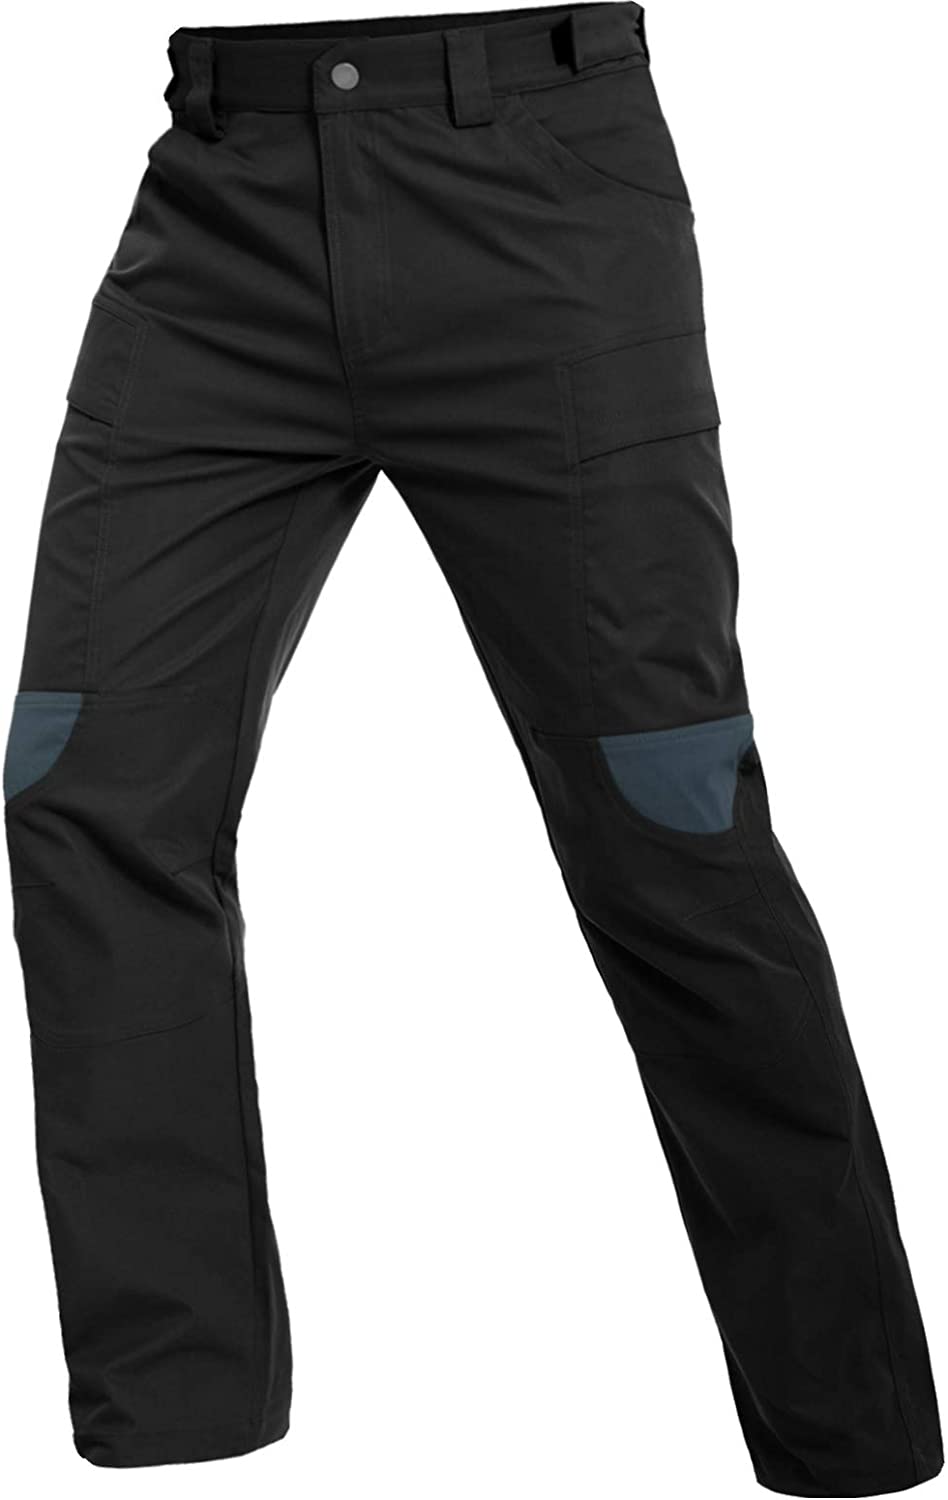 Hiauspor Men's Convertible Hiking Pants Quick Dry Zip Off Cargo Pants